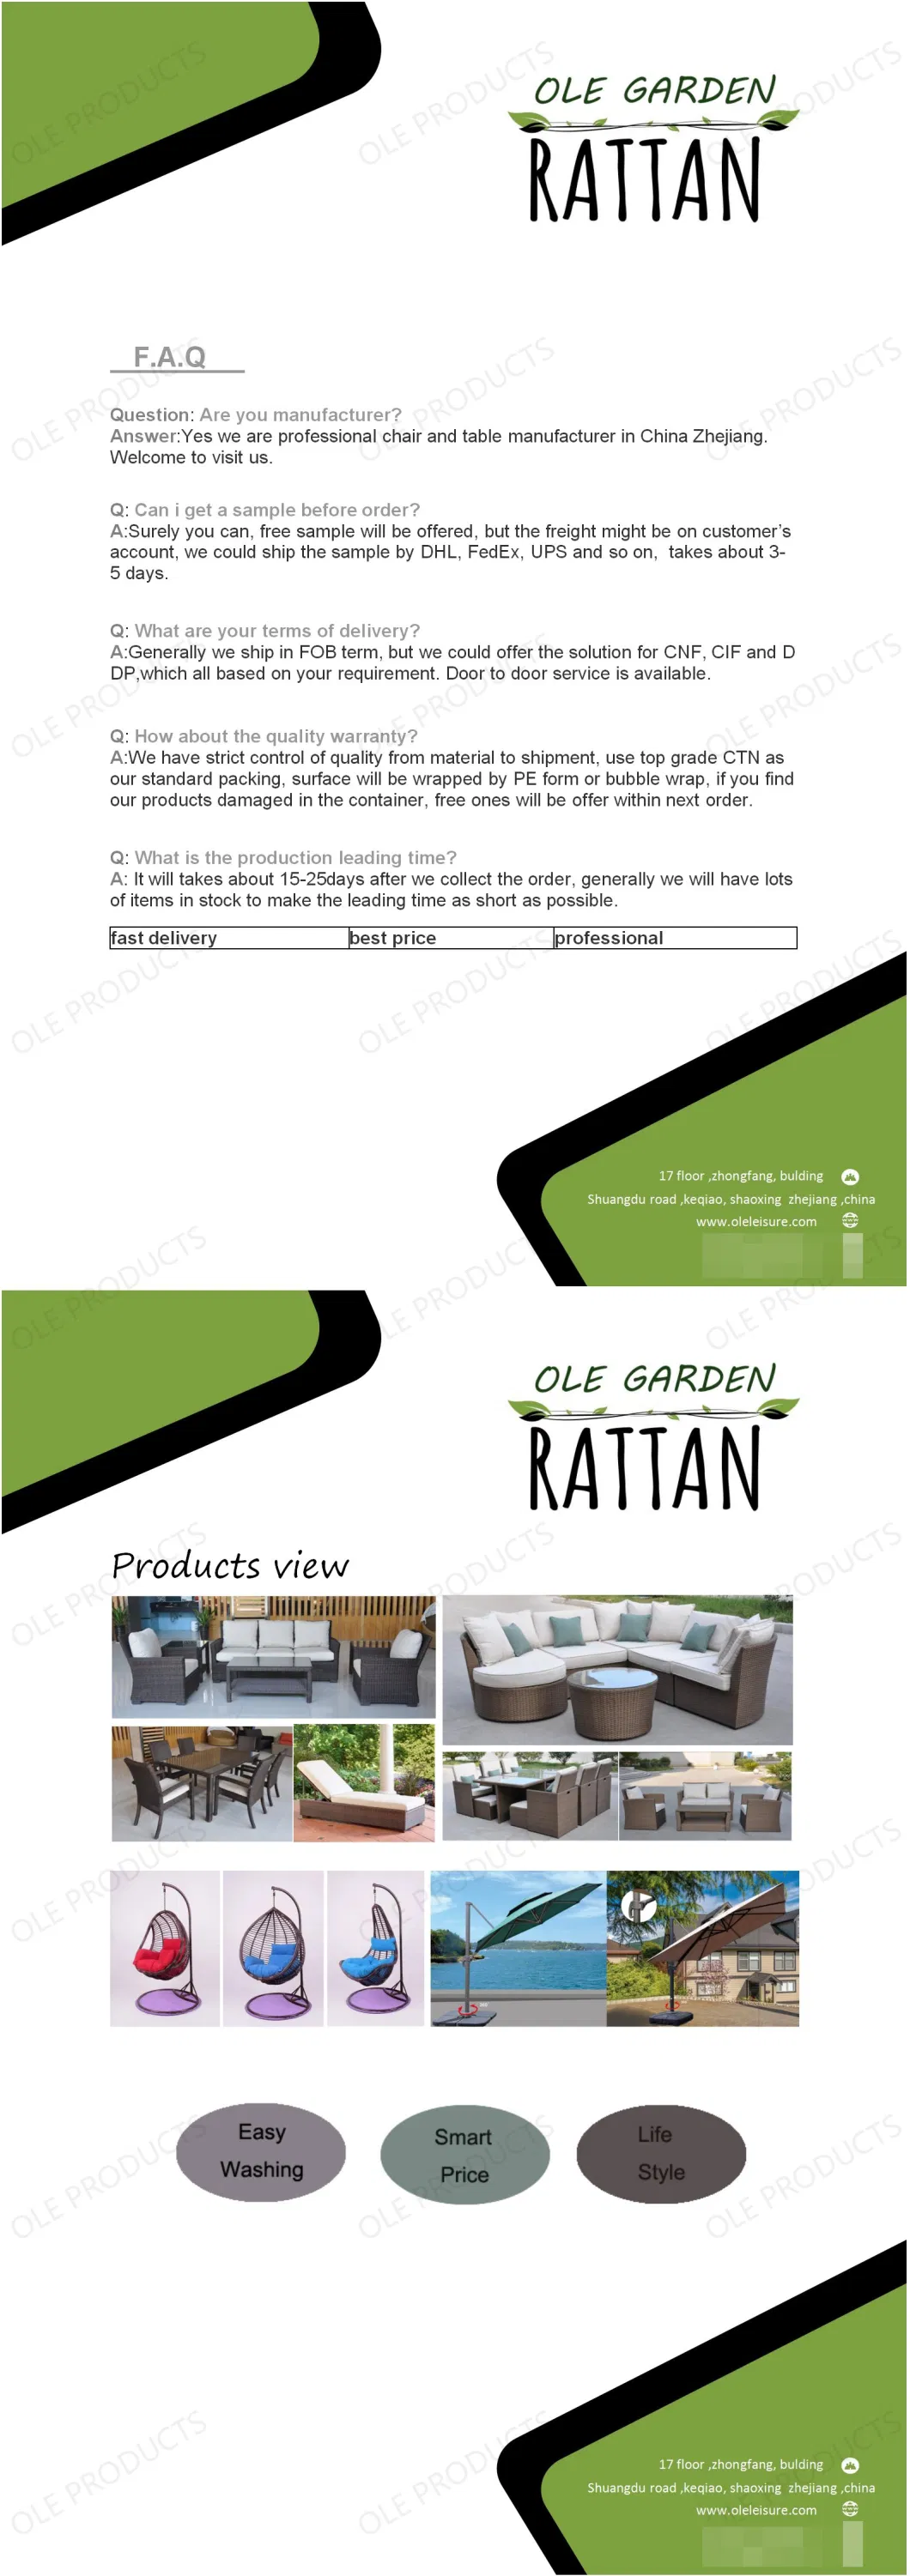 7 Pieces Outdoor Wicker Garden Furniture Rattan Sofa Set Comfortable Rattan Sofa Patio Conversation Sets